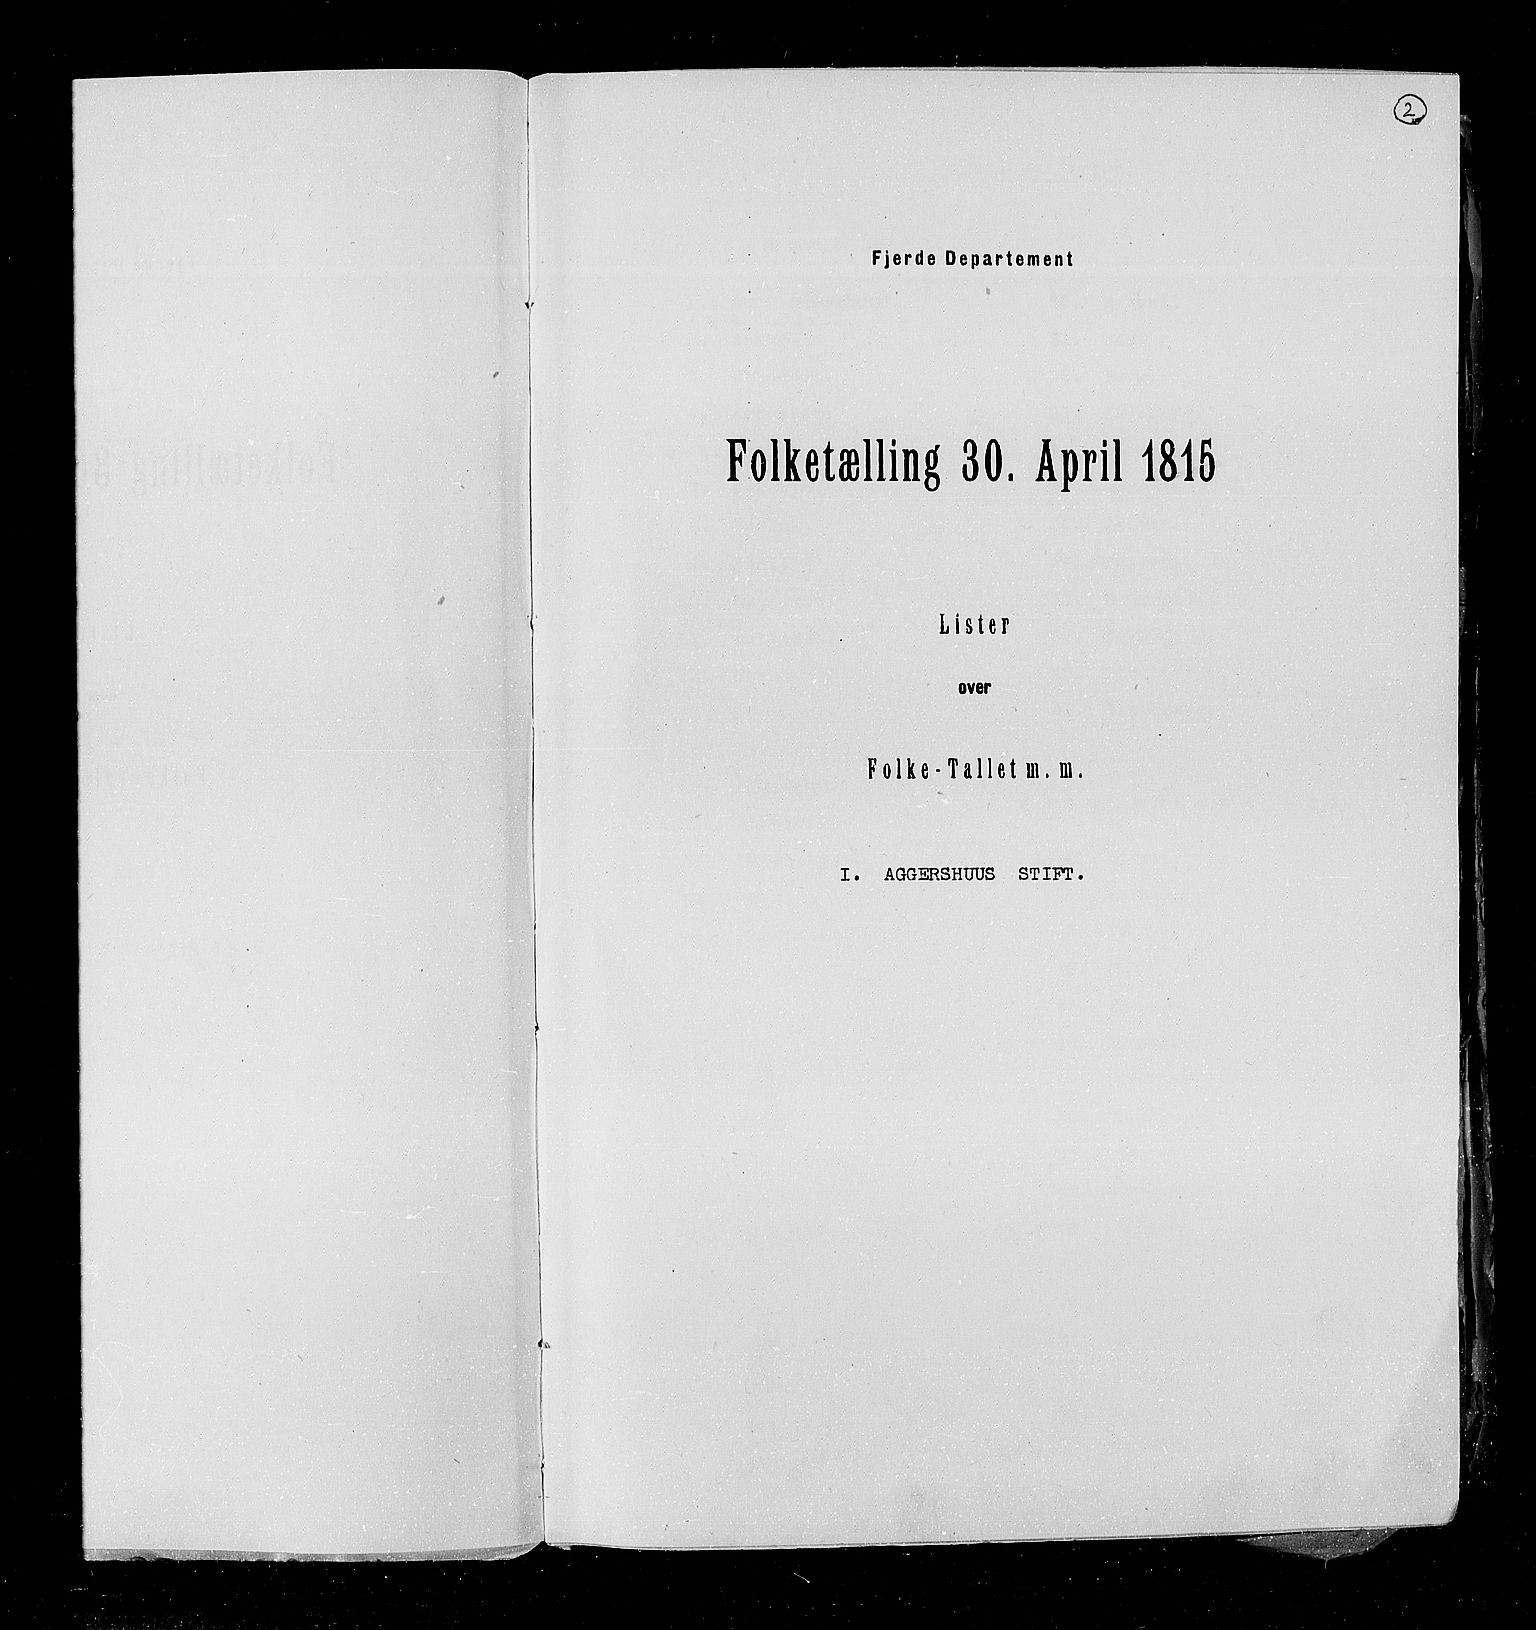 RA, Census 1815, vol. 1: Akershus stift and Kristiansand stift, 1815, p. 3